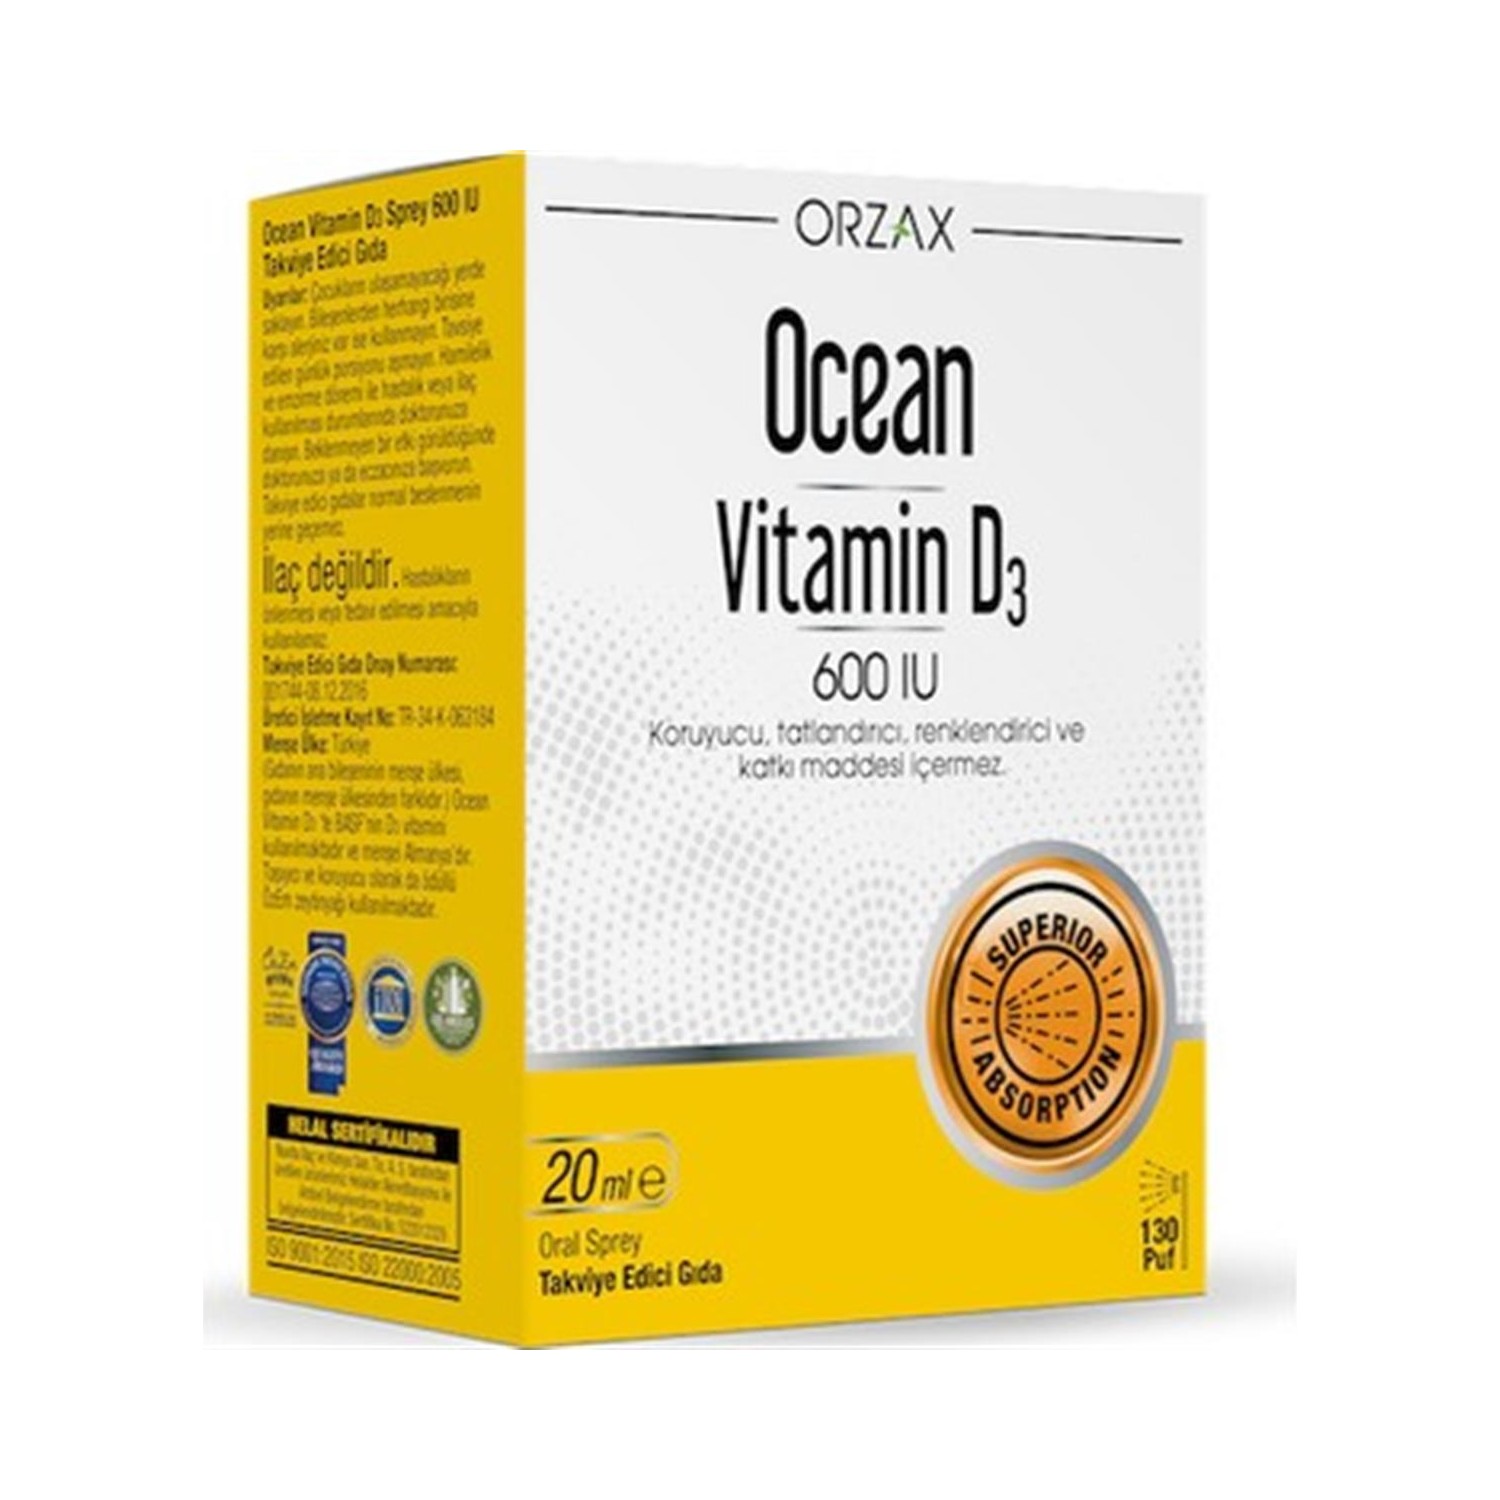 Спрей Orzax Ocean Vitamin D3 600 МЕ, 20 мл